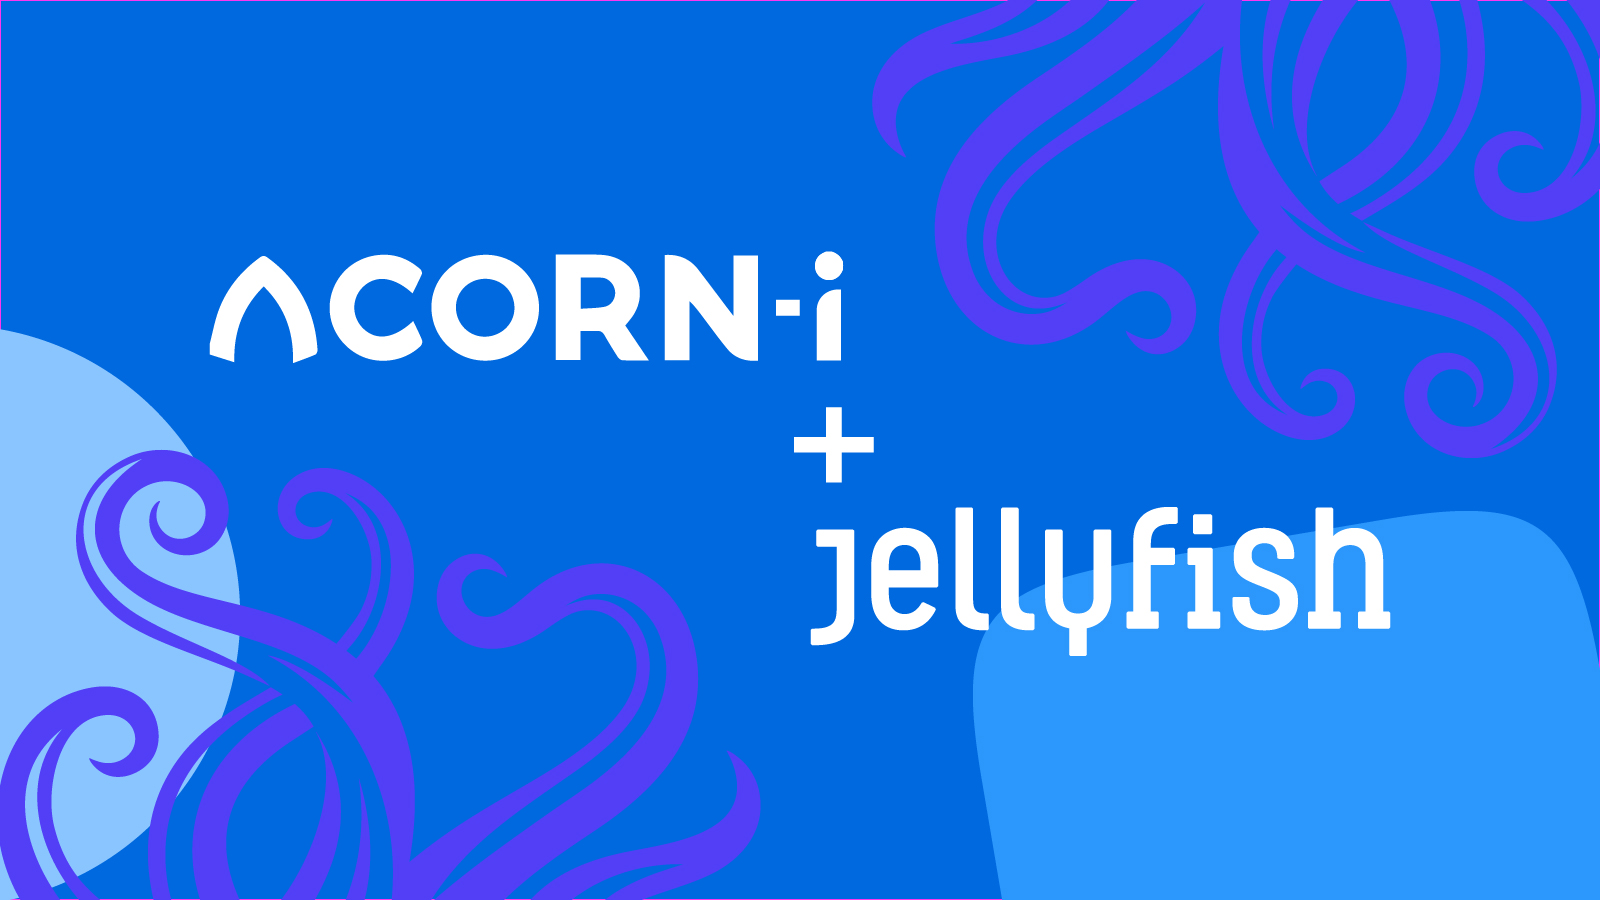 Jellyfish_Acorn-i__1600x900px-100